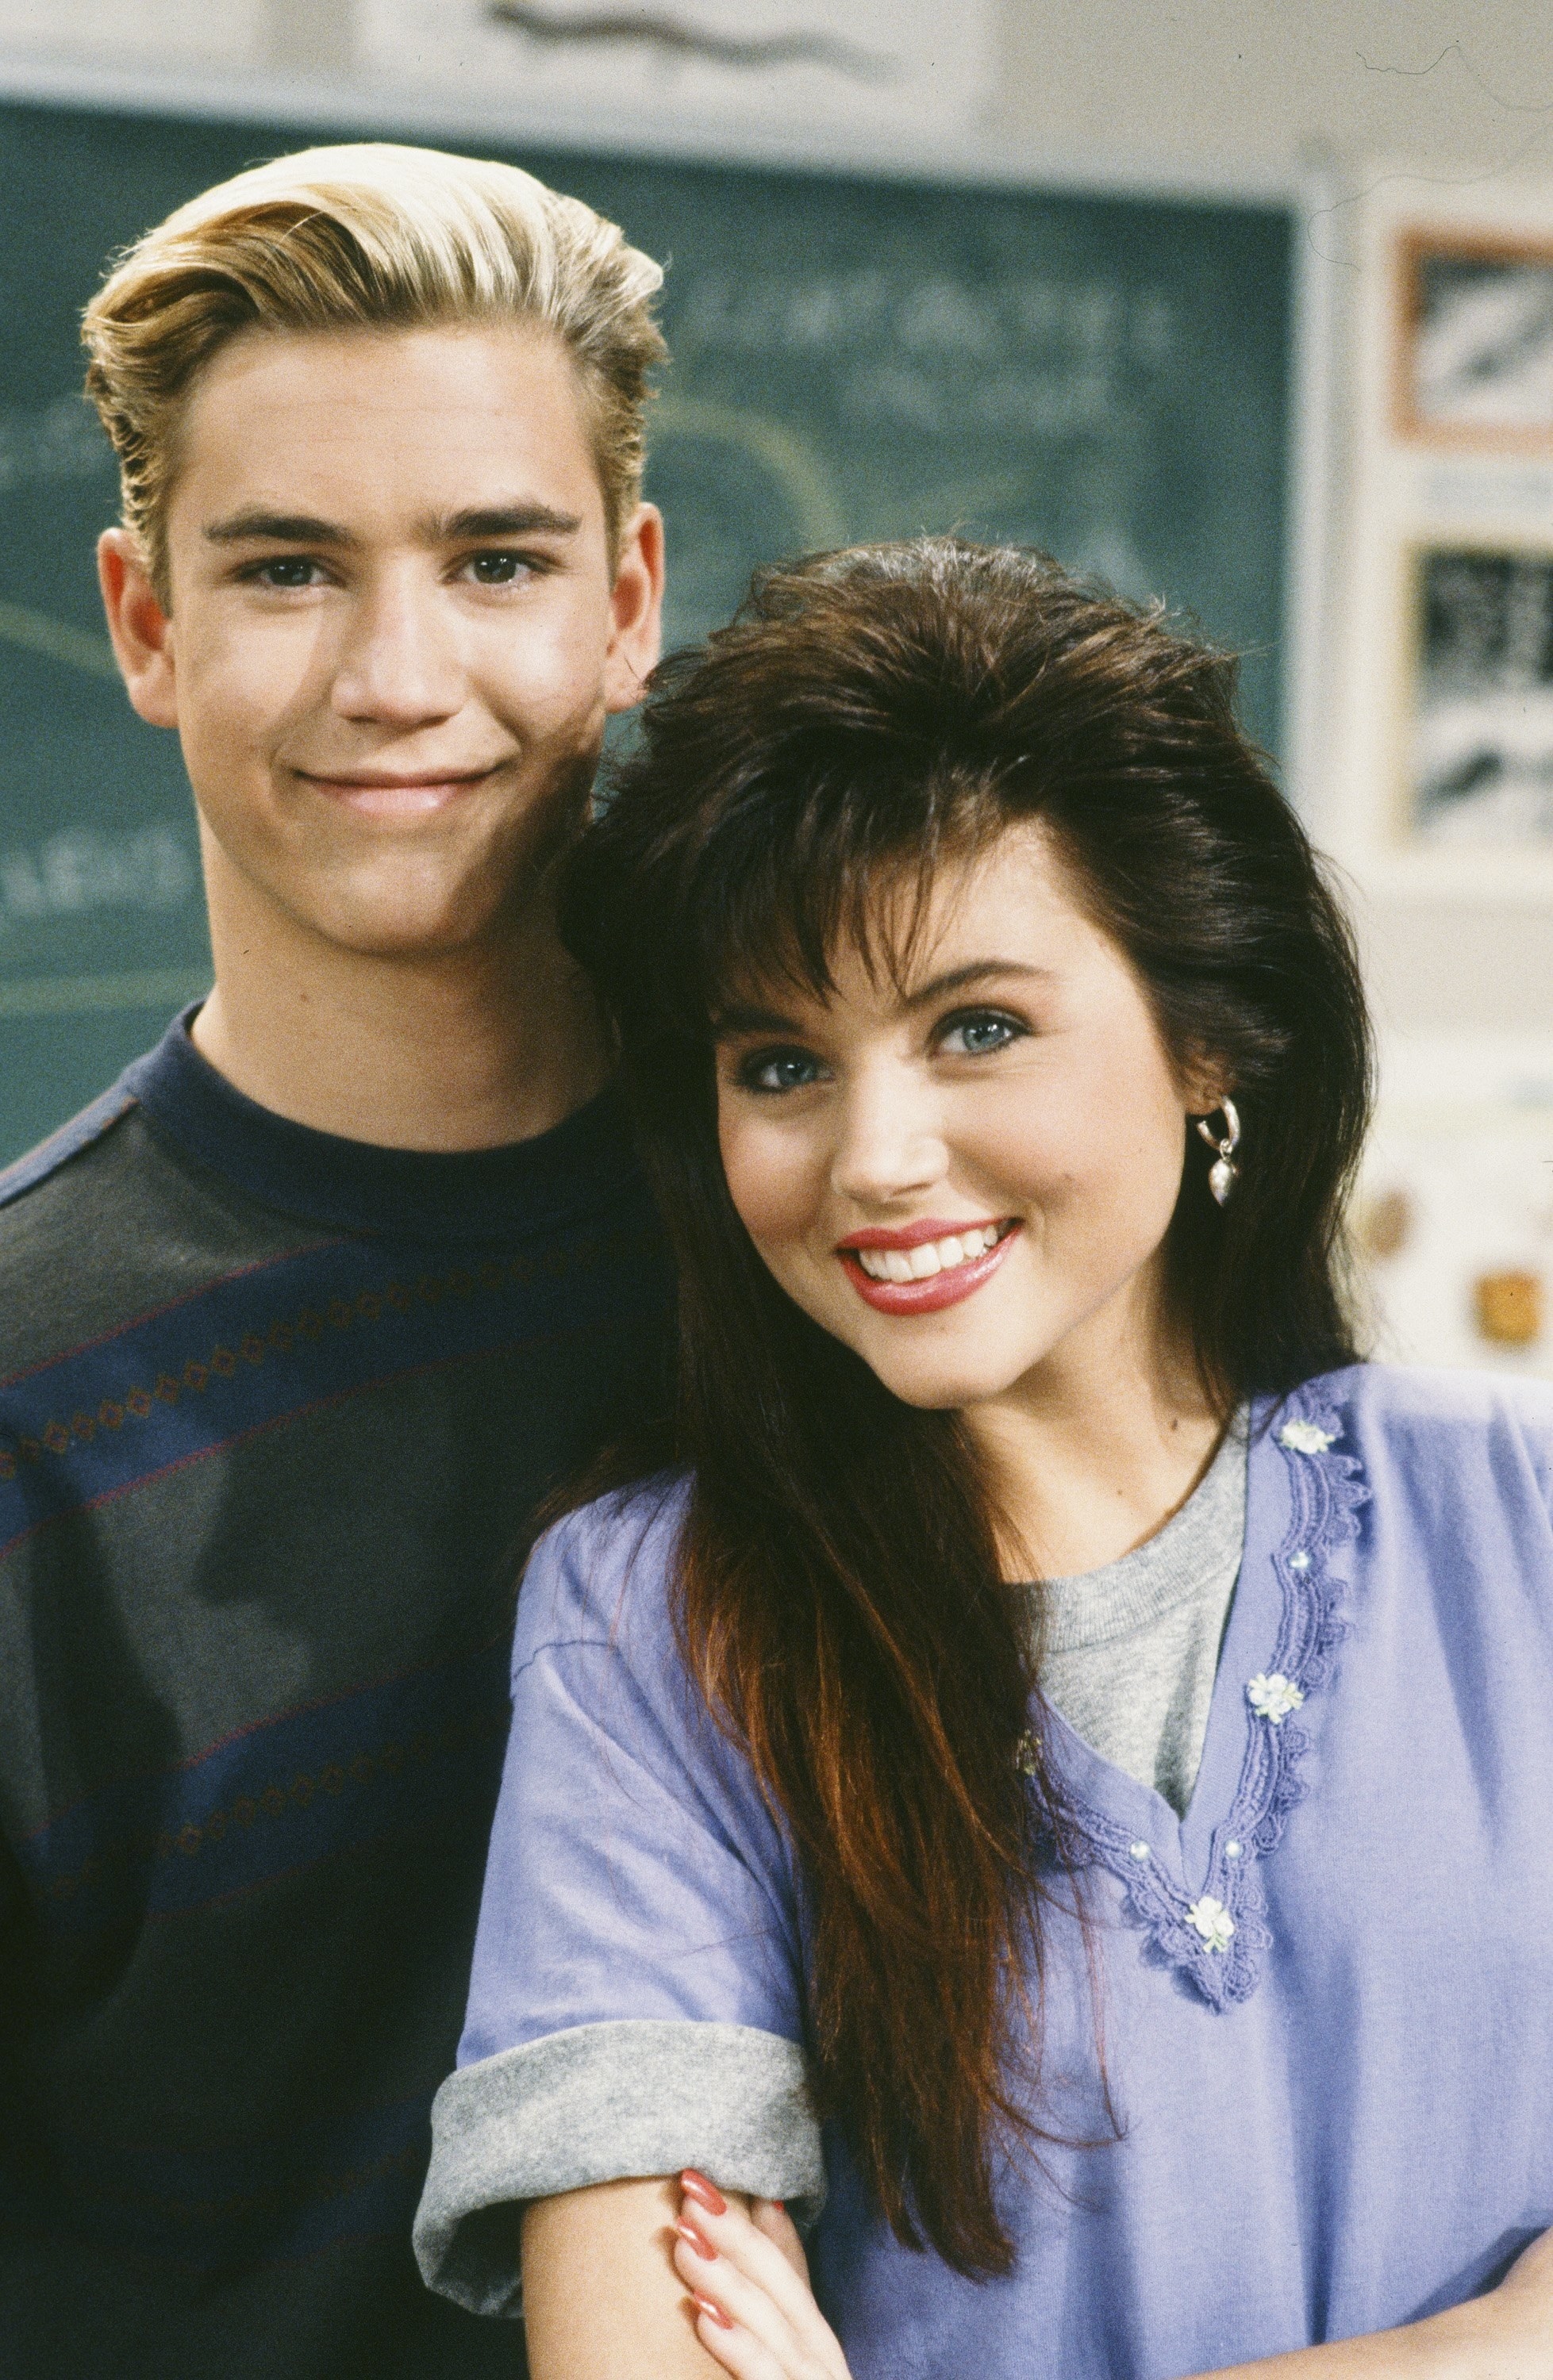 Mark-Paul Gosselaar as Zack Morris andTiffani Thiessen as Kelly Kapowski smile in an onset photo from October 1991